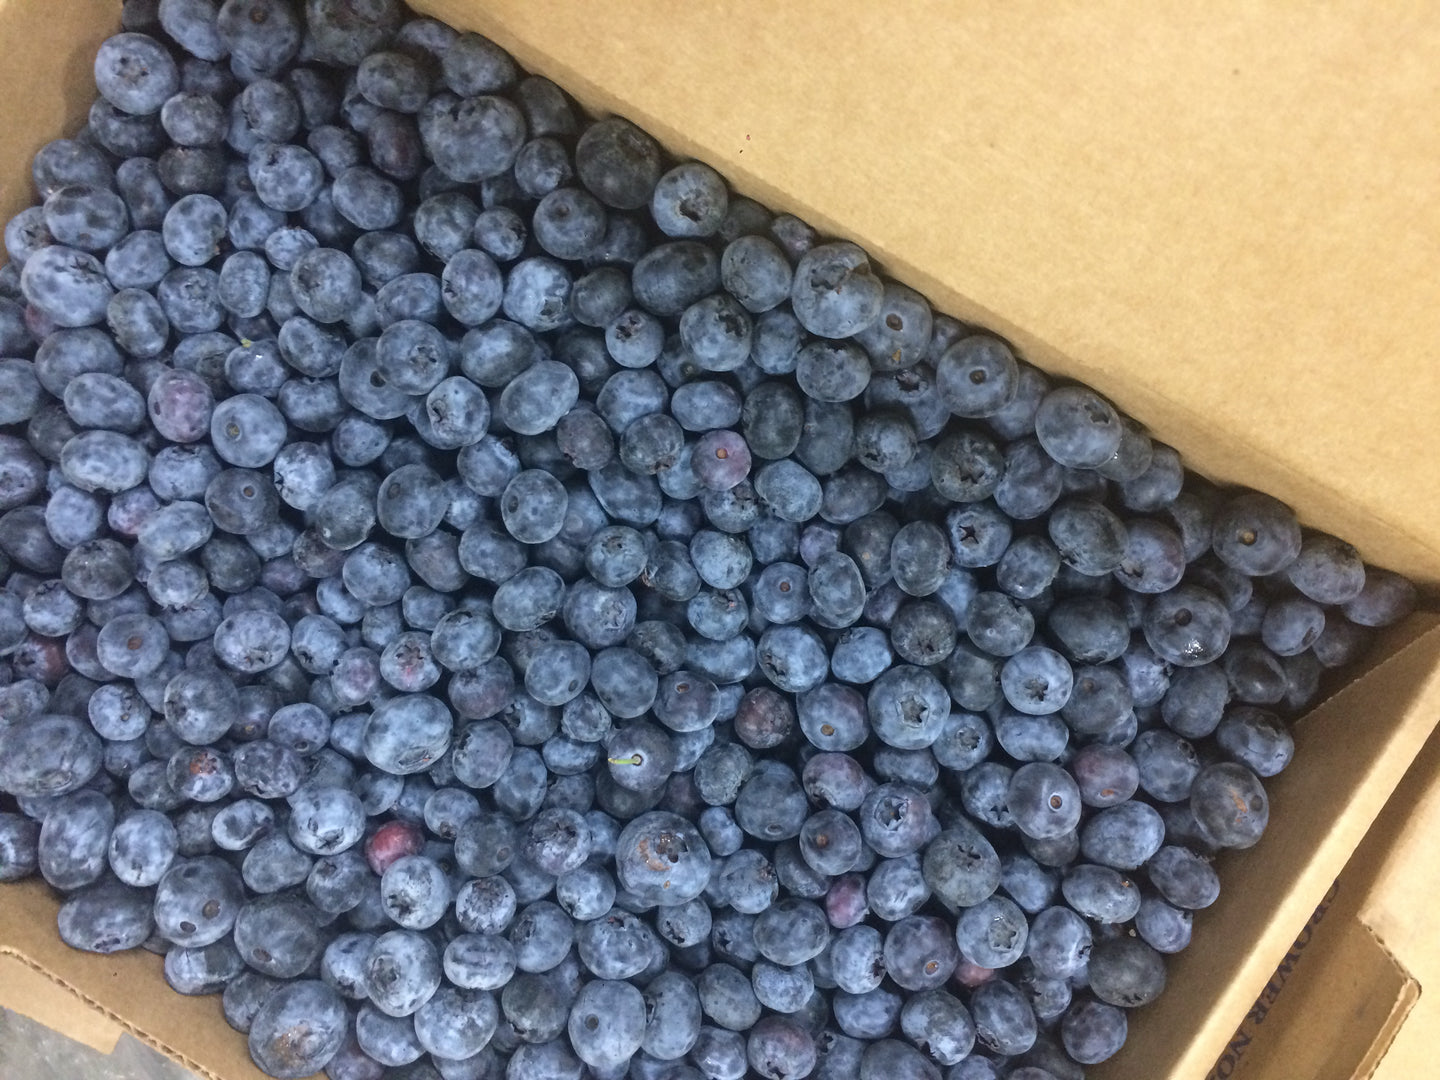 Pre-Order 5lb Box of Blueberries for Pickup